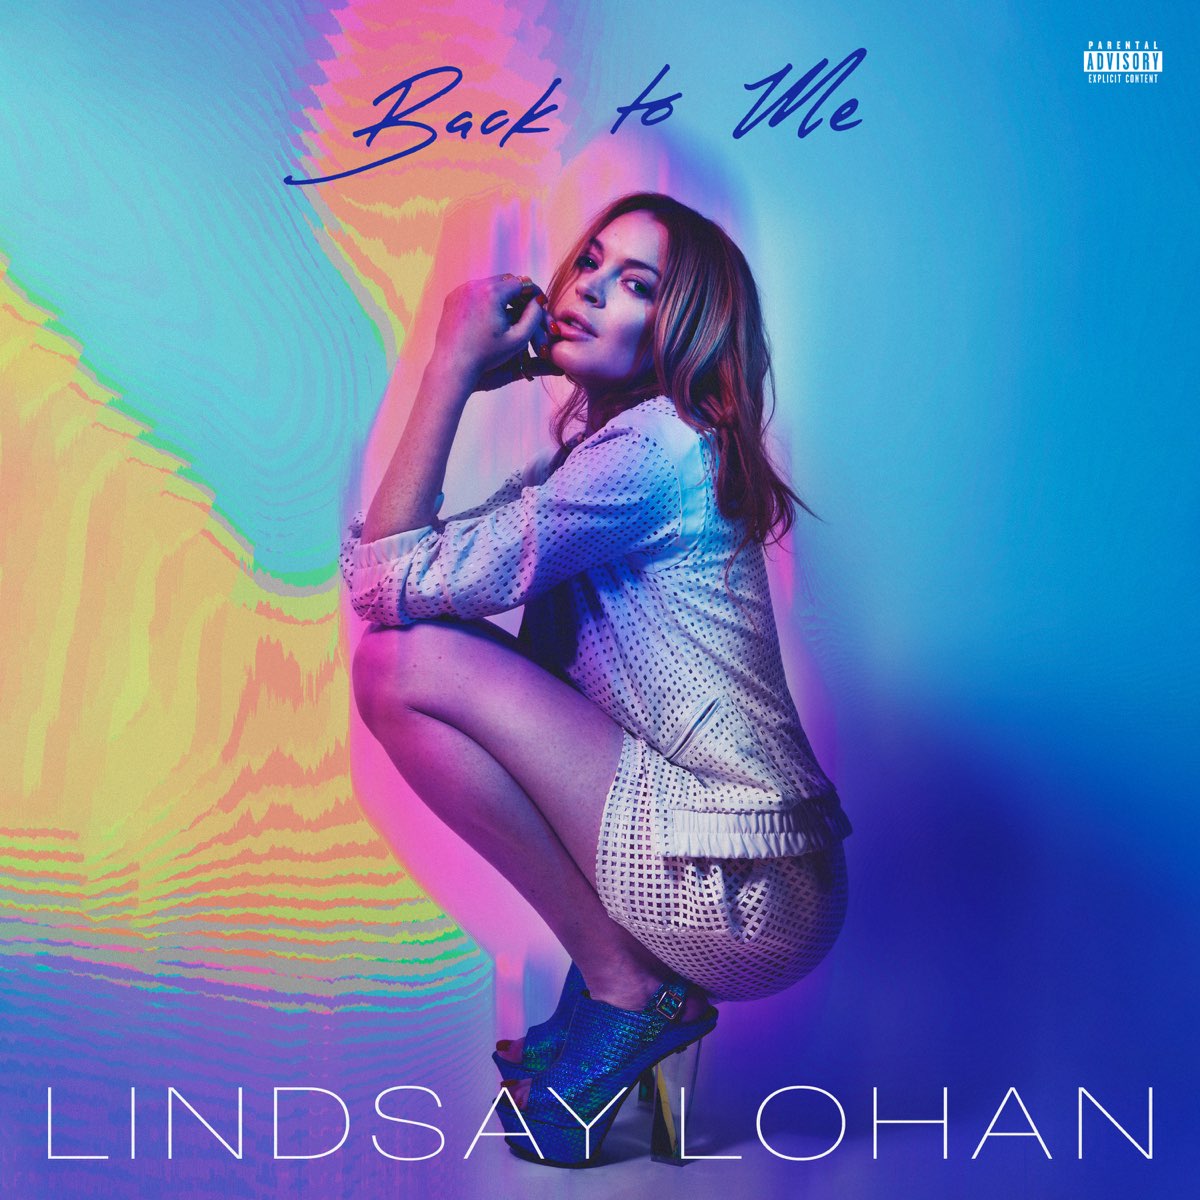 Listen to Lindsay Lohan's Version of 'Jingle Bell Rock